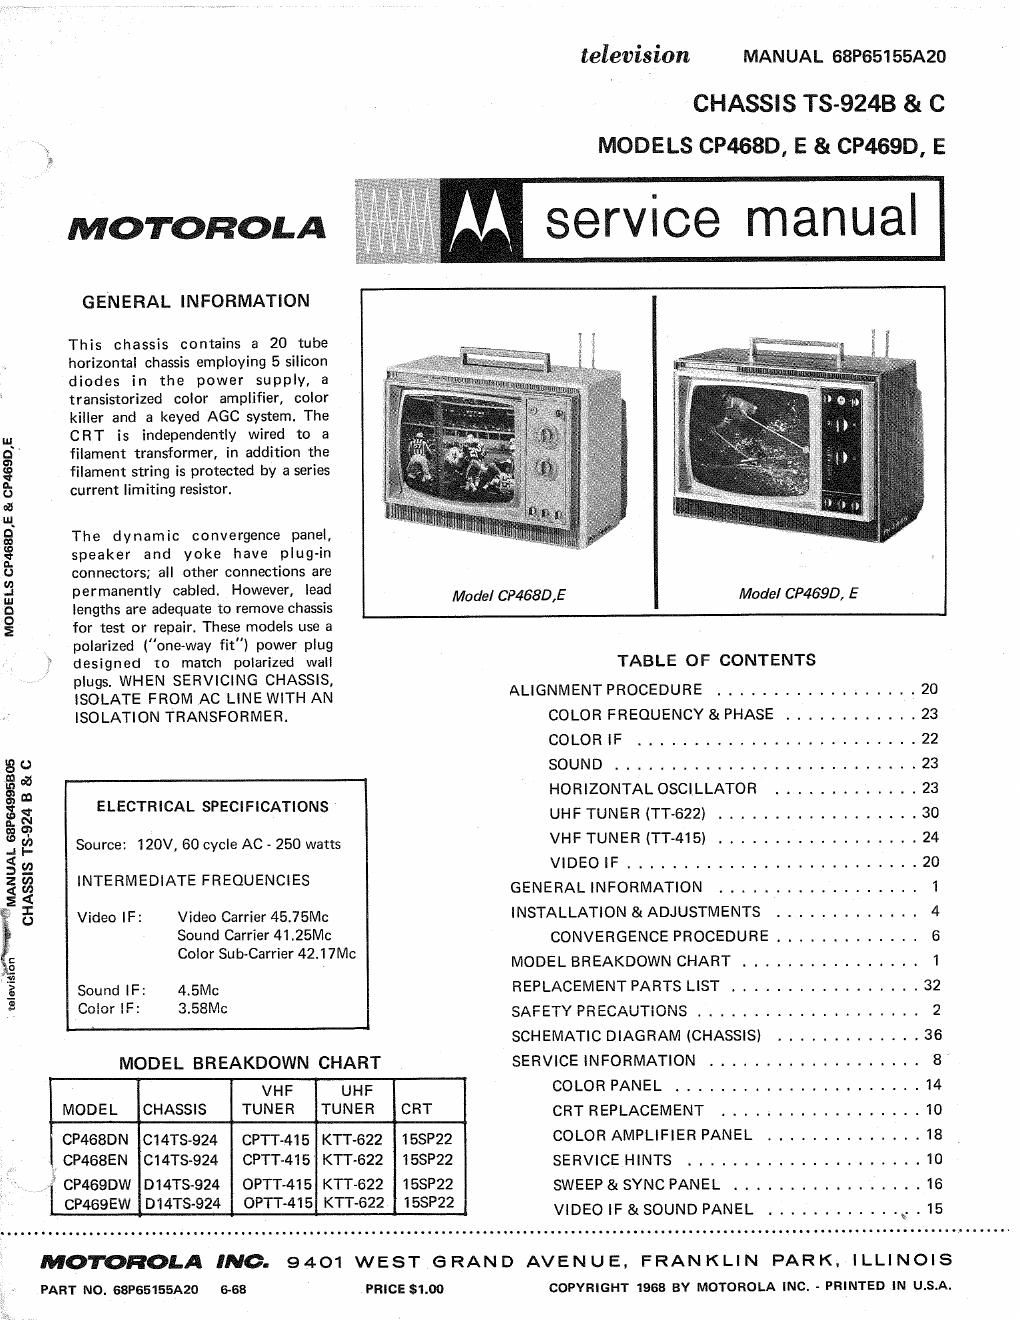 motorola cp 468 e service manual